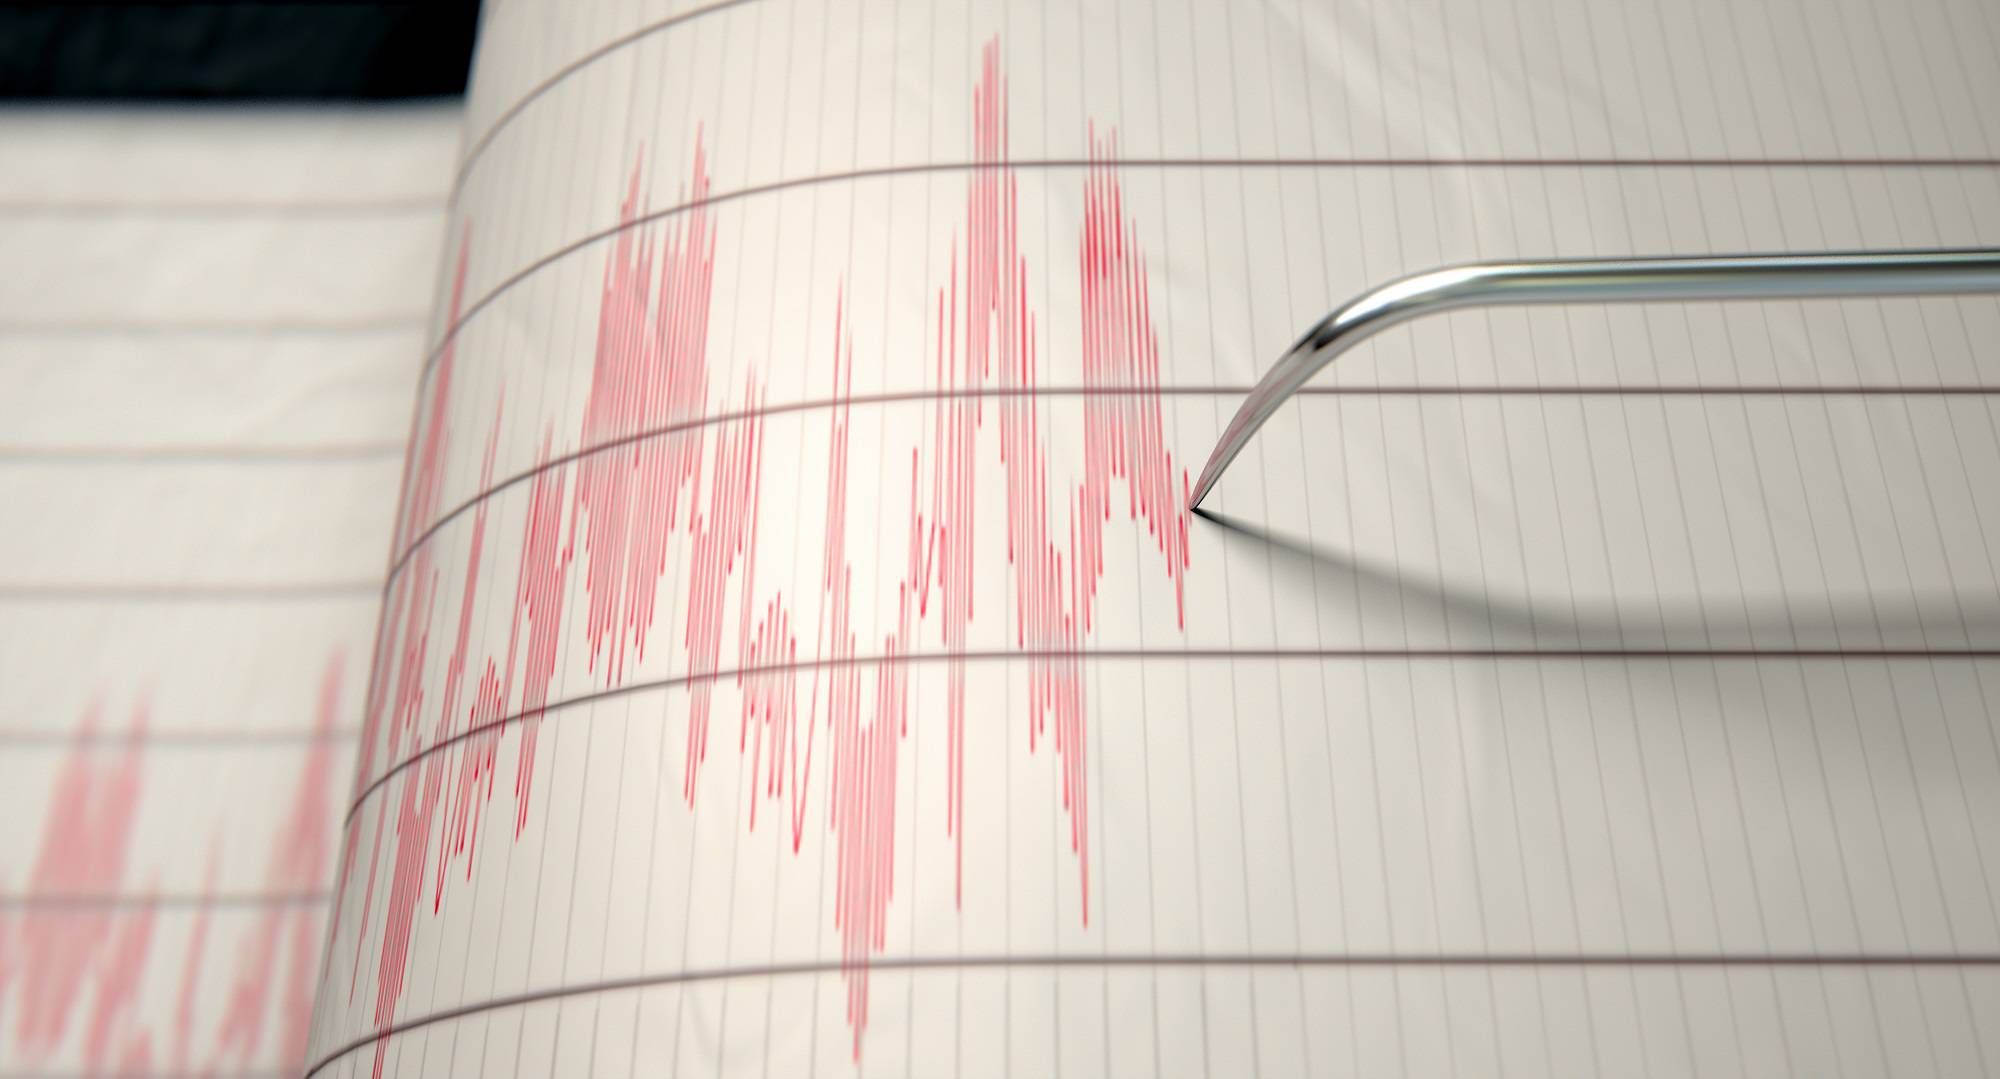 A magnitude 7.3 earthquake struck northern New Zealand